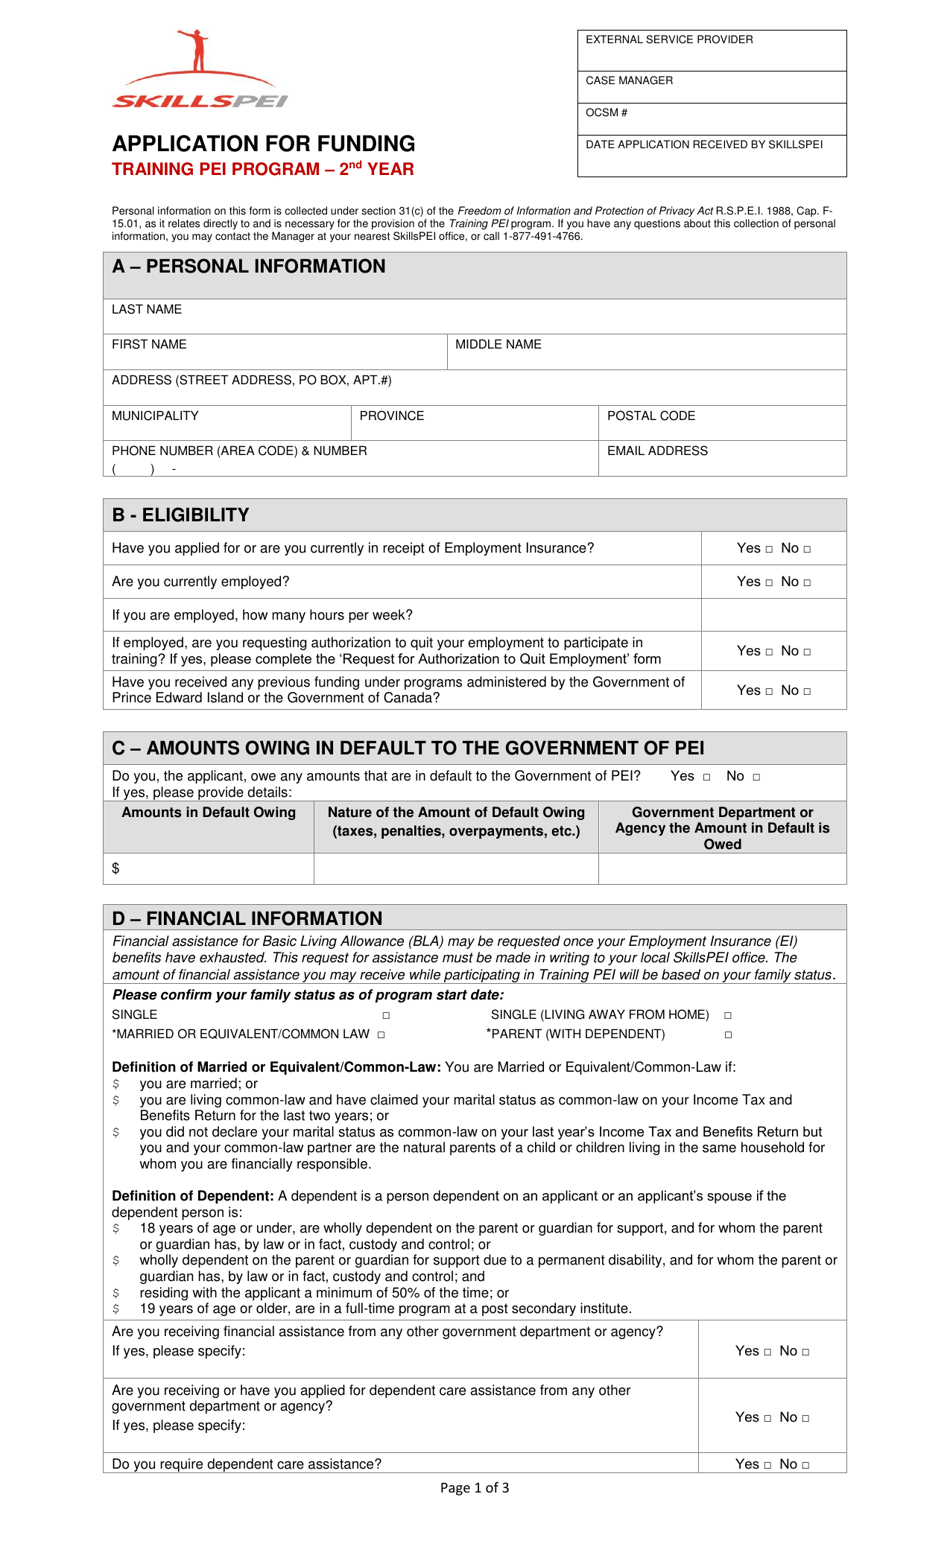 Application for Funding - Training Pei Program - 2nd Year - Prince Edward Island, Canada, Page 1